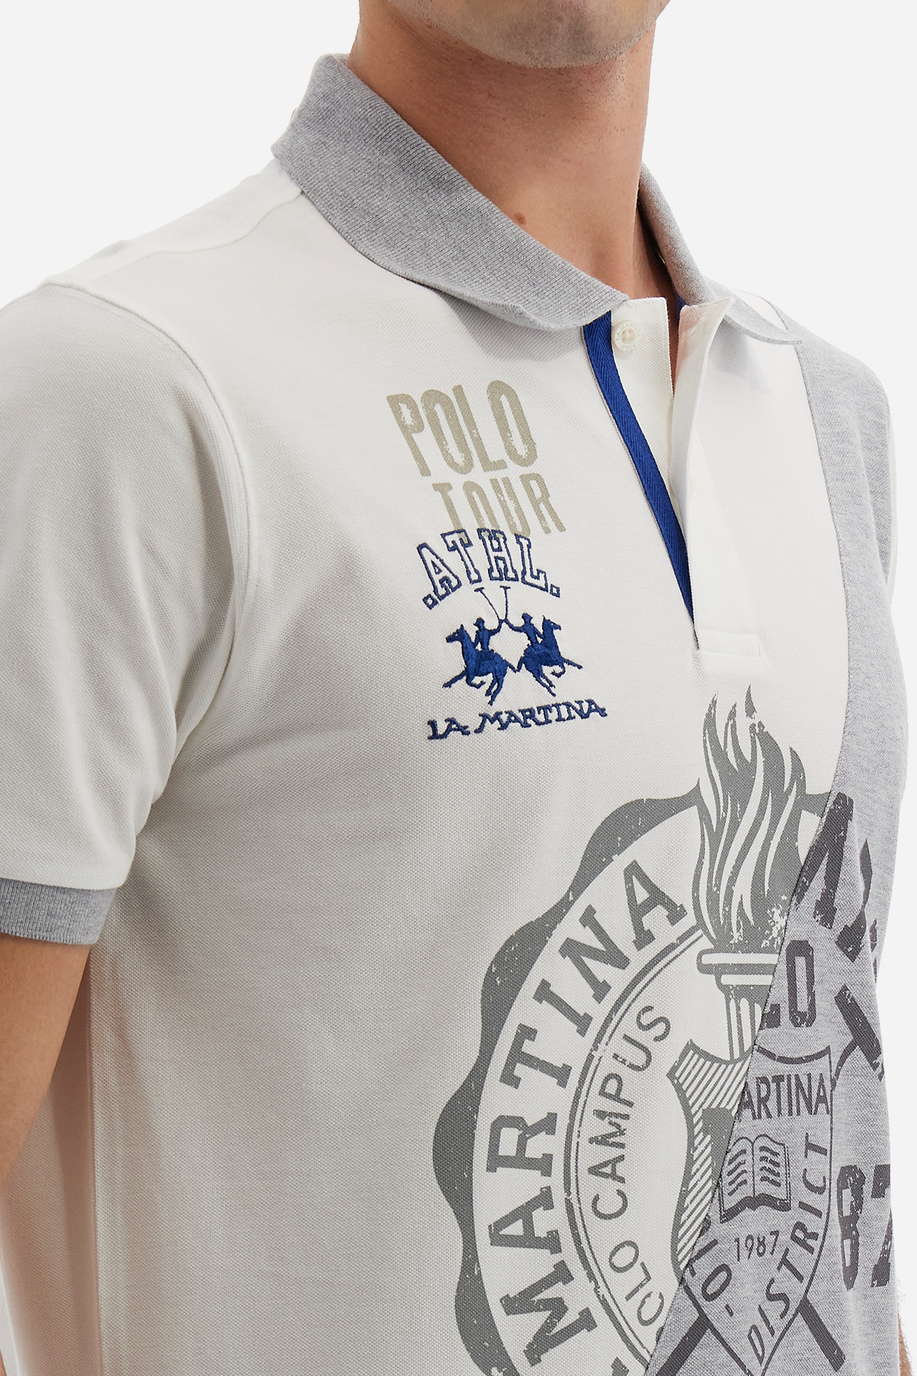 Kurzarm-Poloshirt für Herren Polo Academy kleines Colorblock-Logo - Vasileos - Kurzarm | La Martina - Official Online Shop